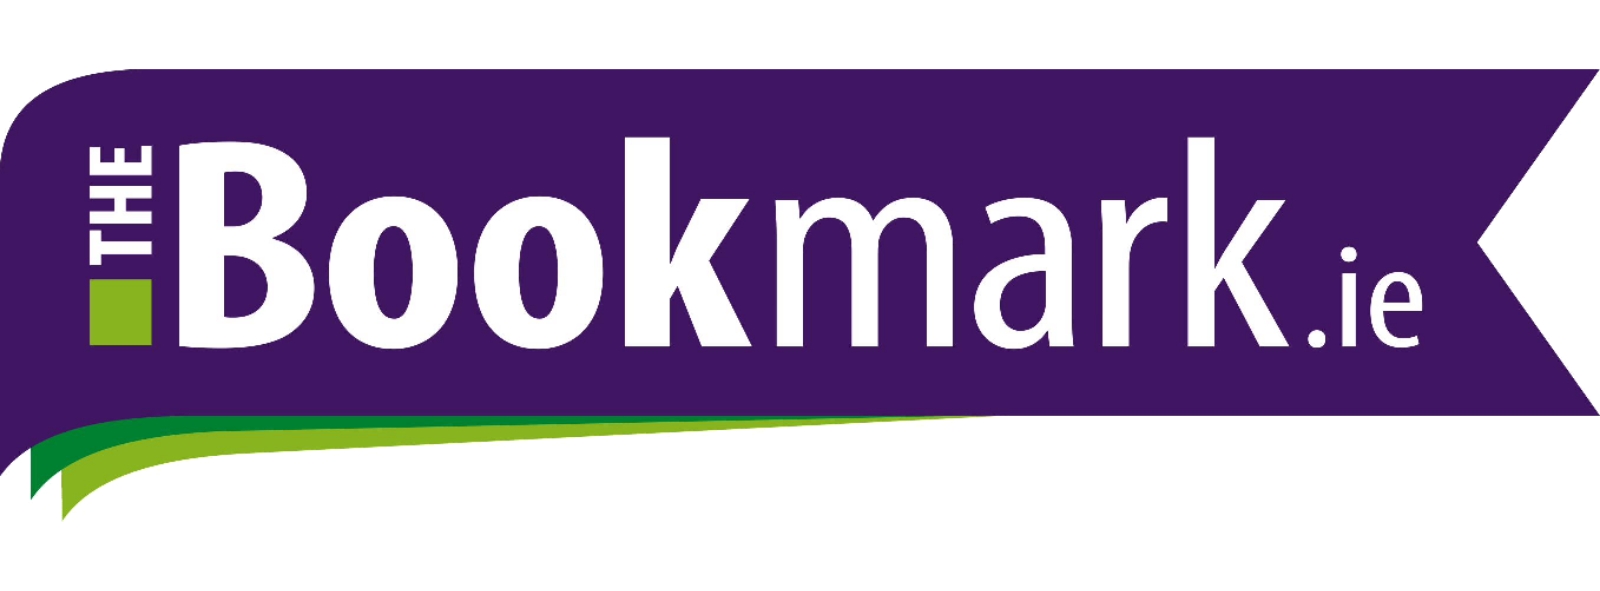 The Bookmark - Main Street